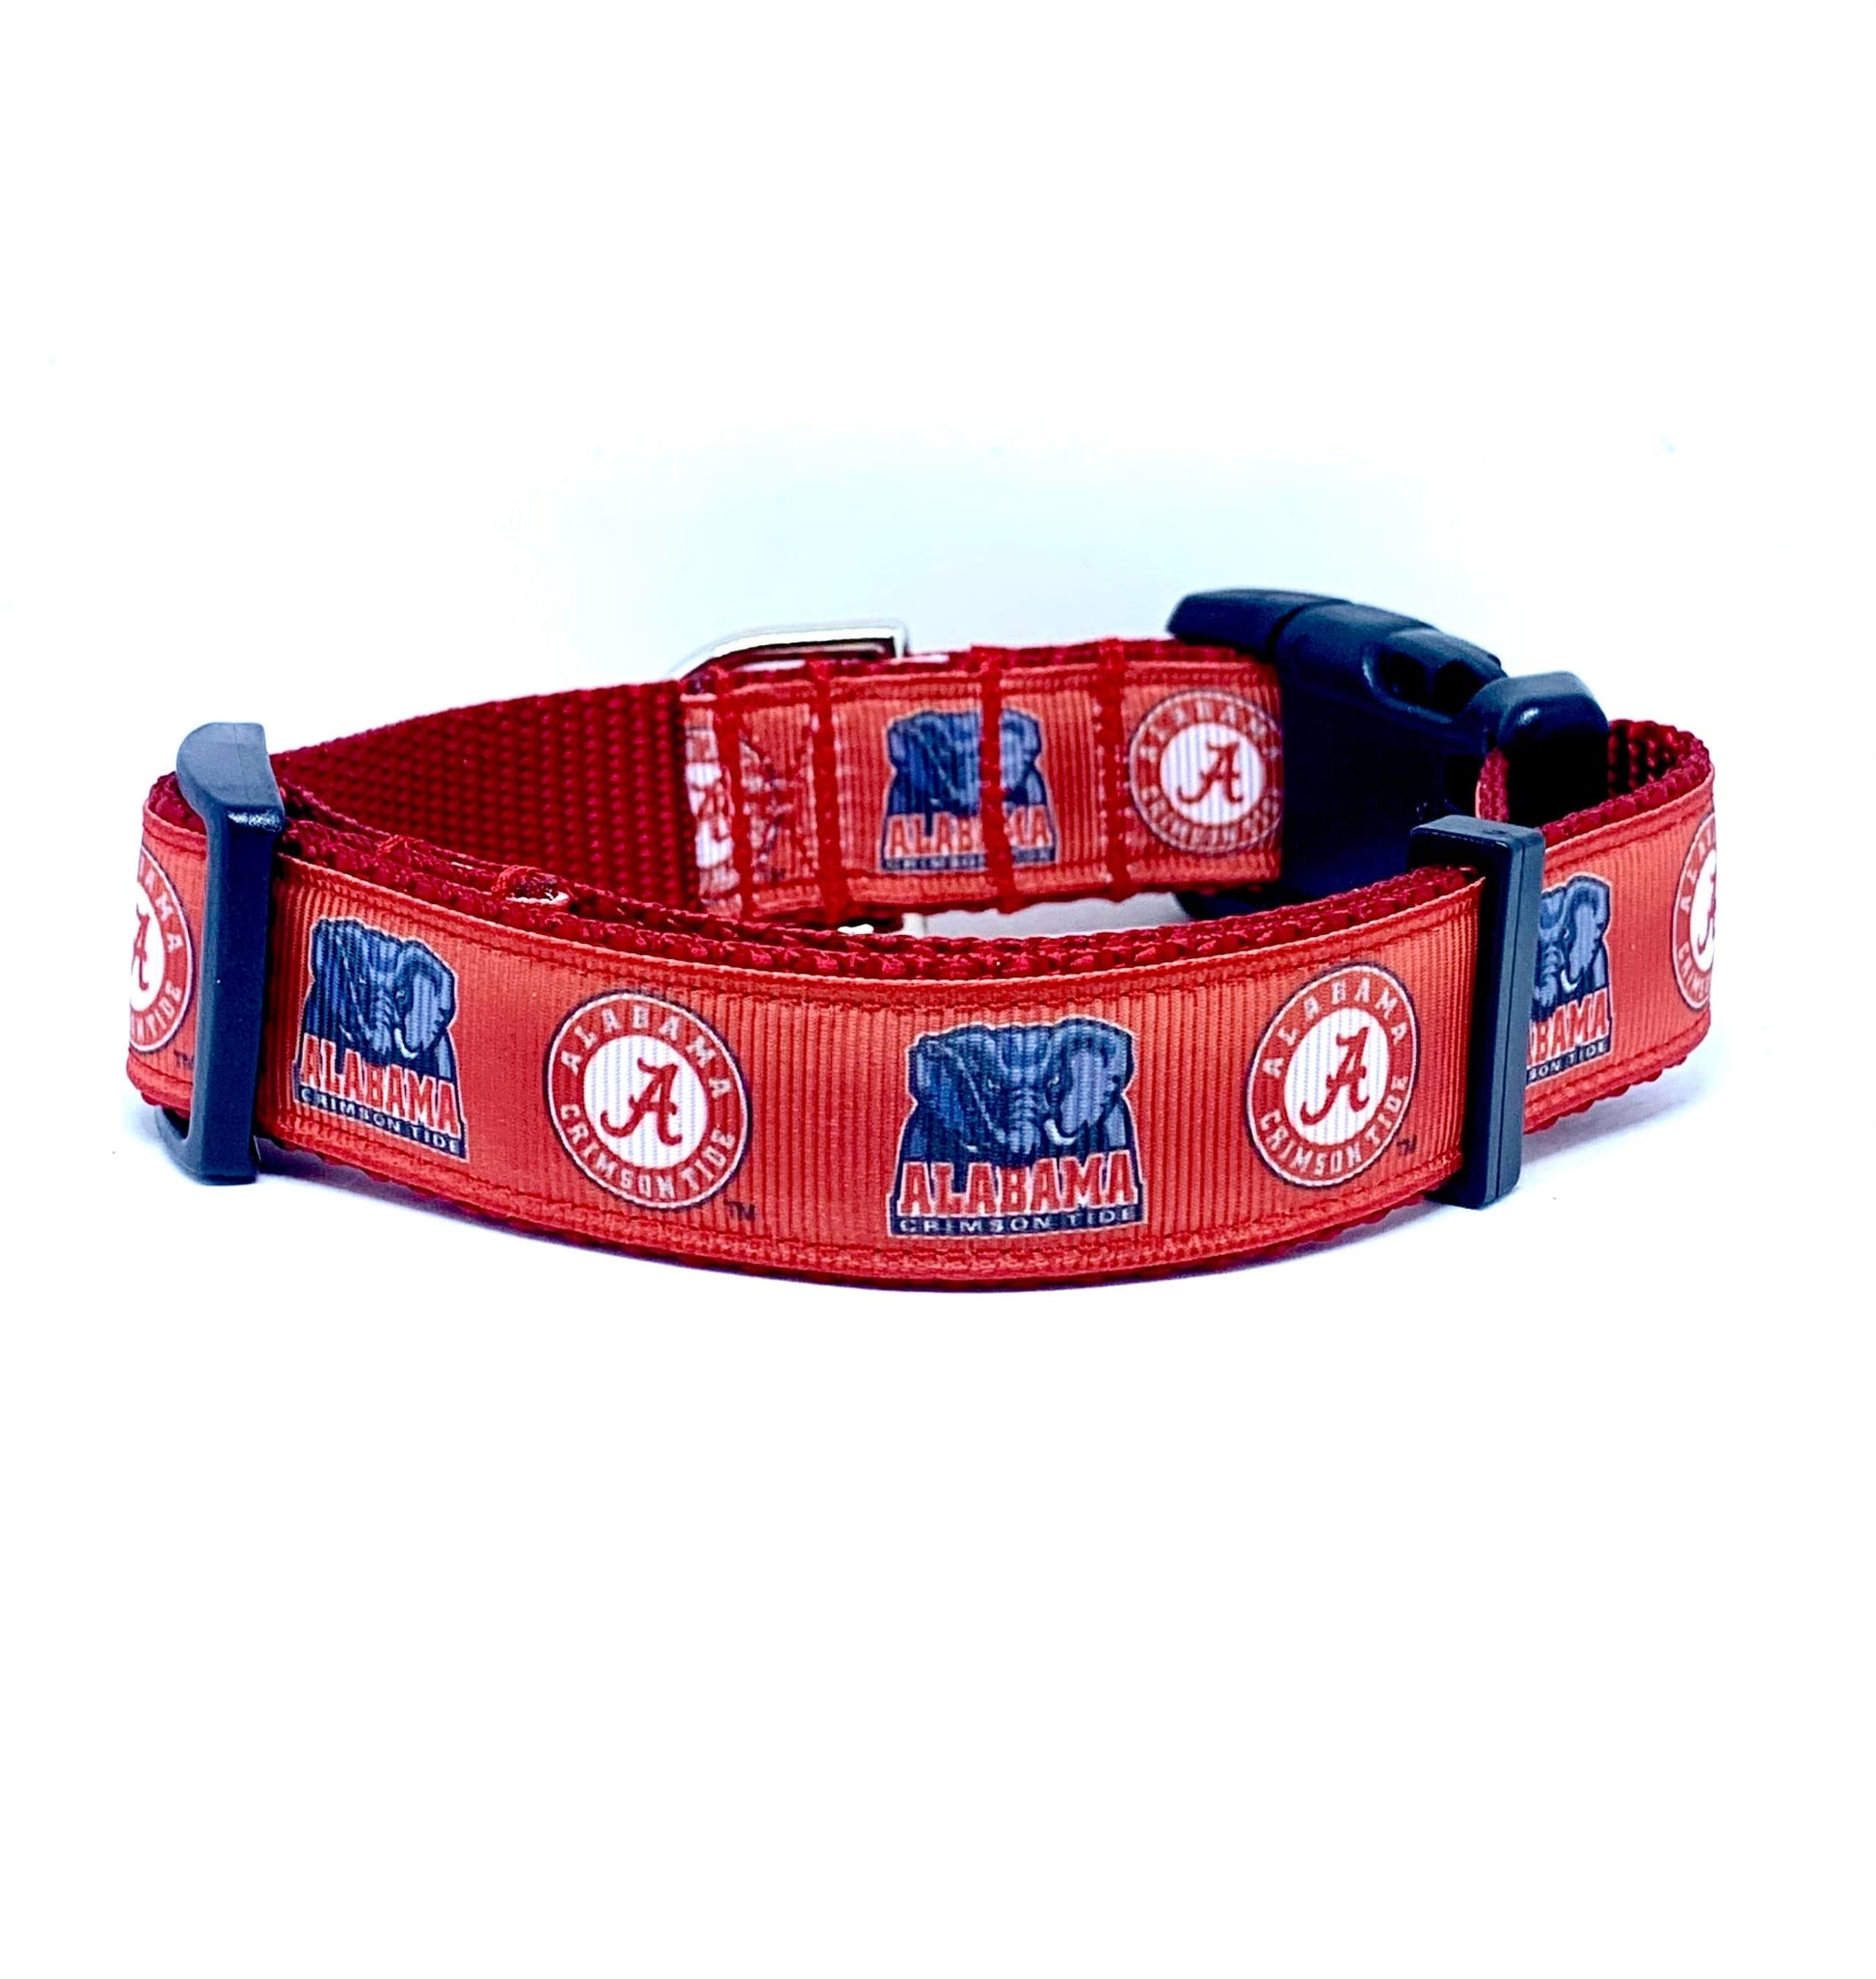 Alabama Crimson Tide Dog Collar or Leash.